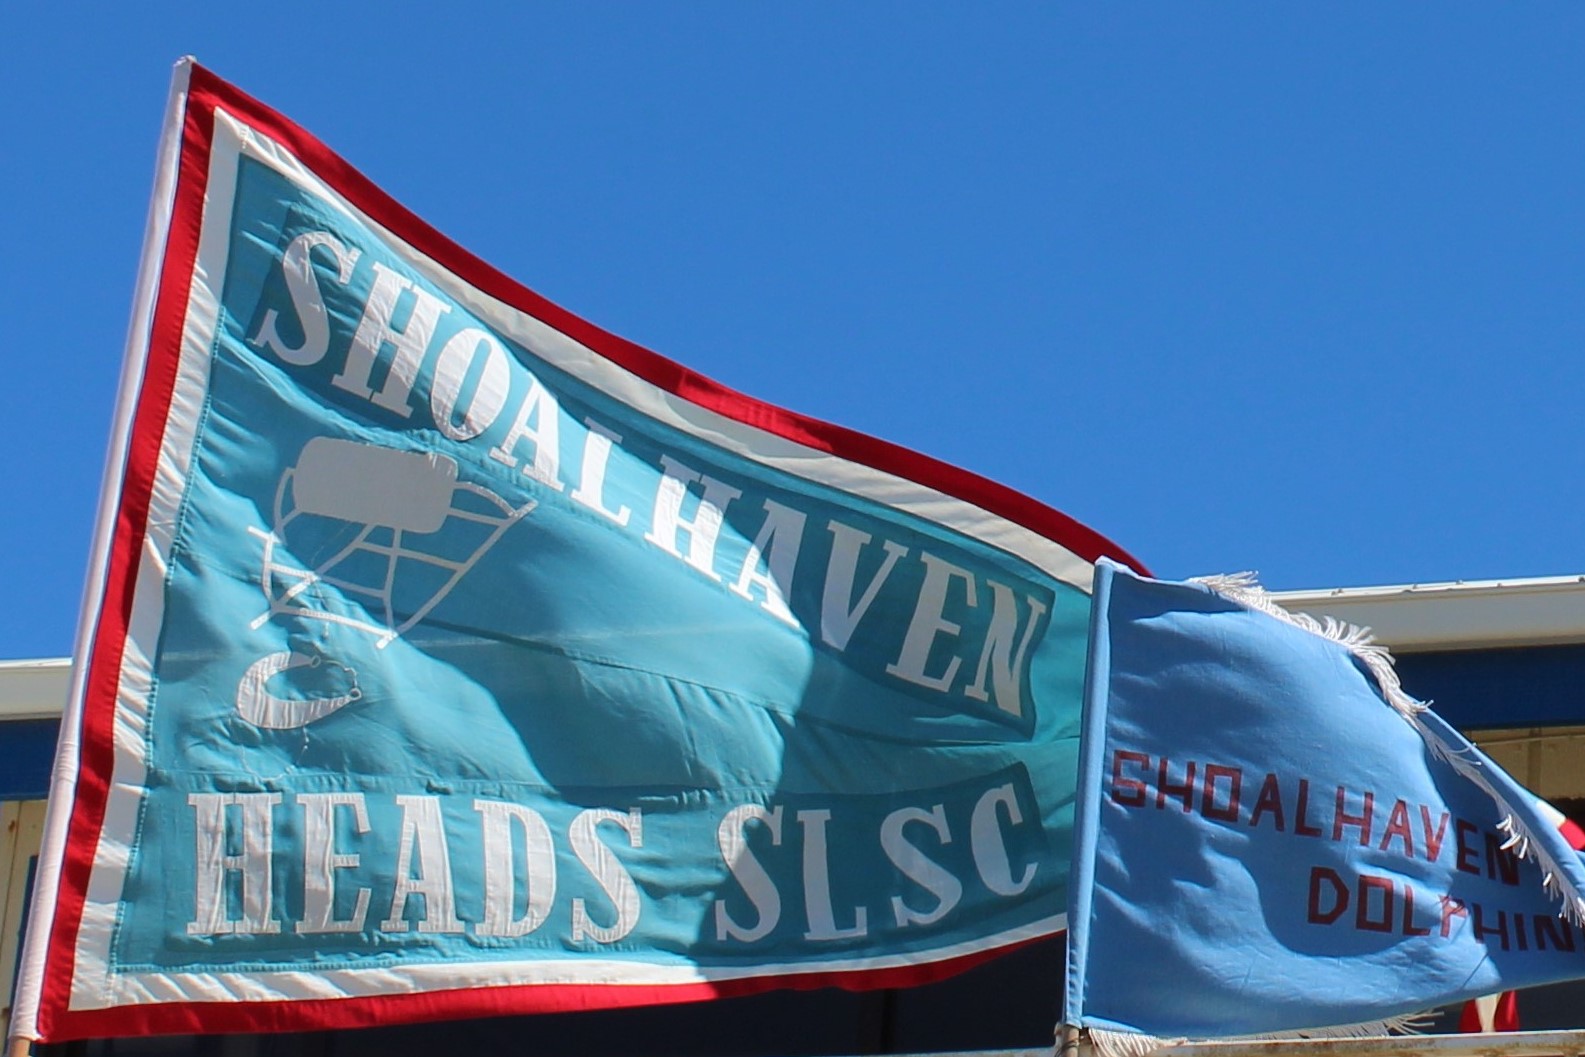 Shoalhaven Heads Surf Club